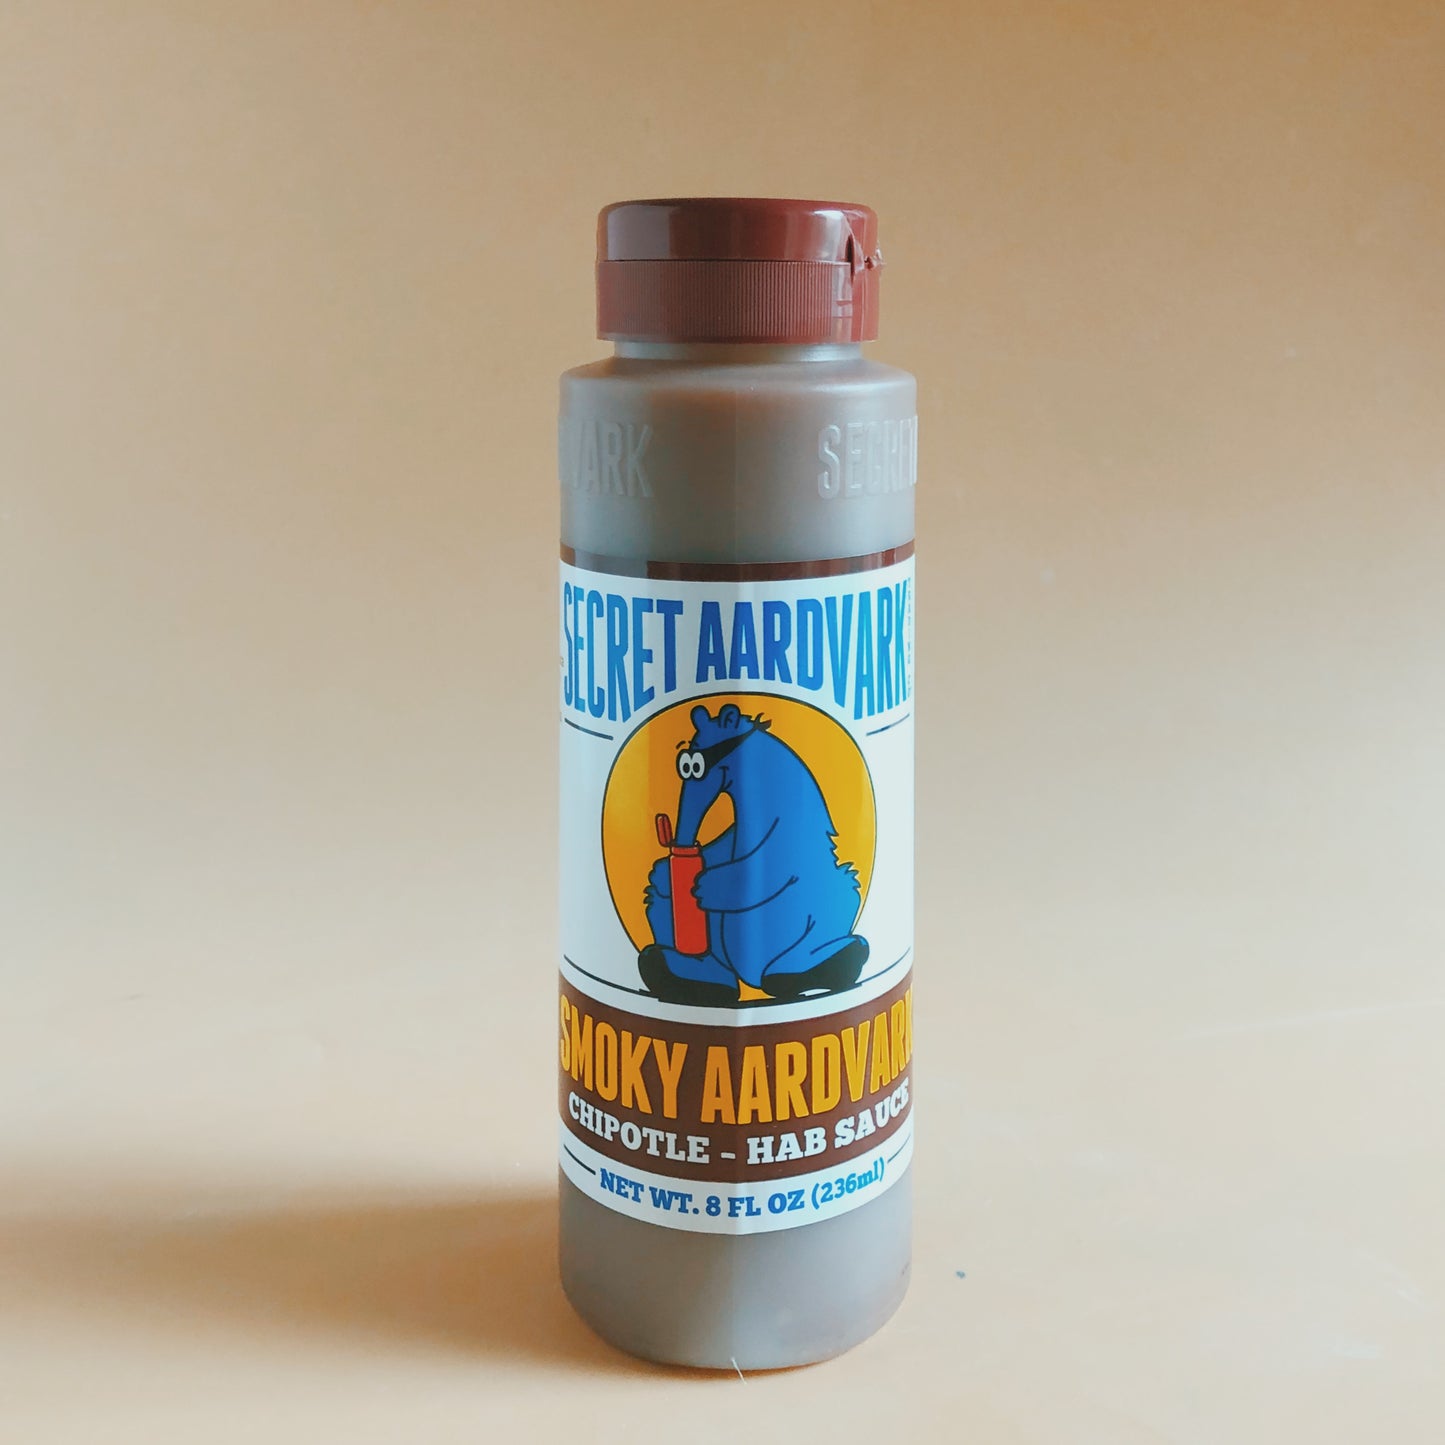 Smokey Aardvark Chipotle-Hab Sauce